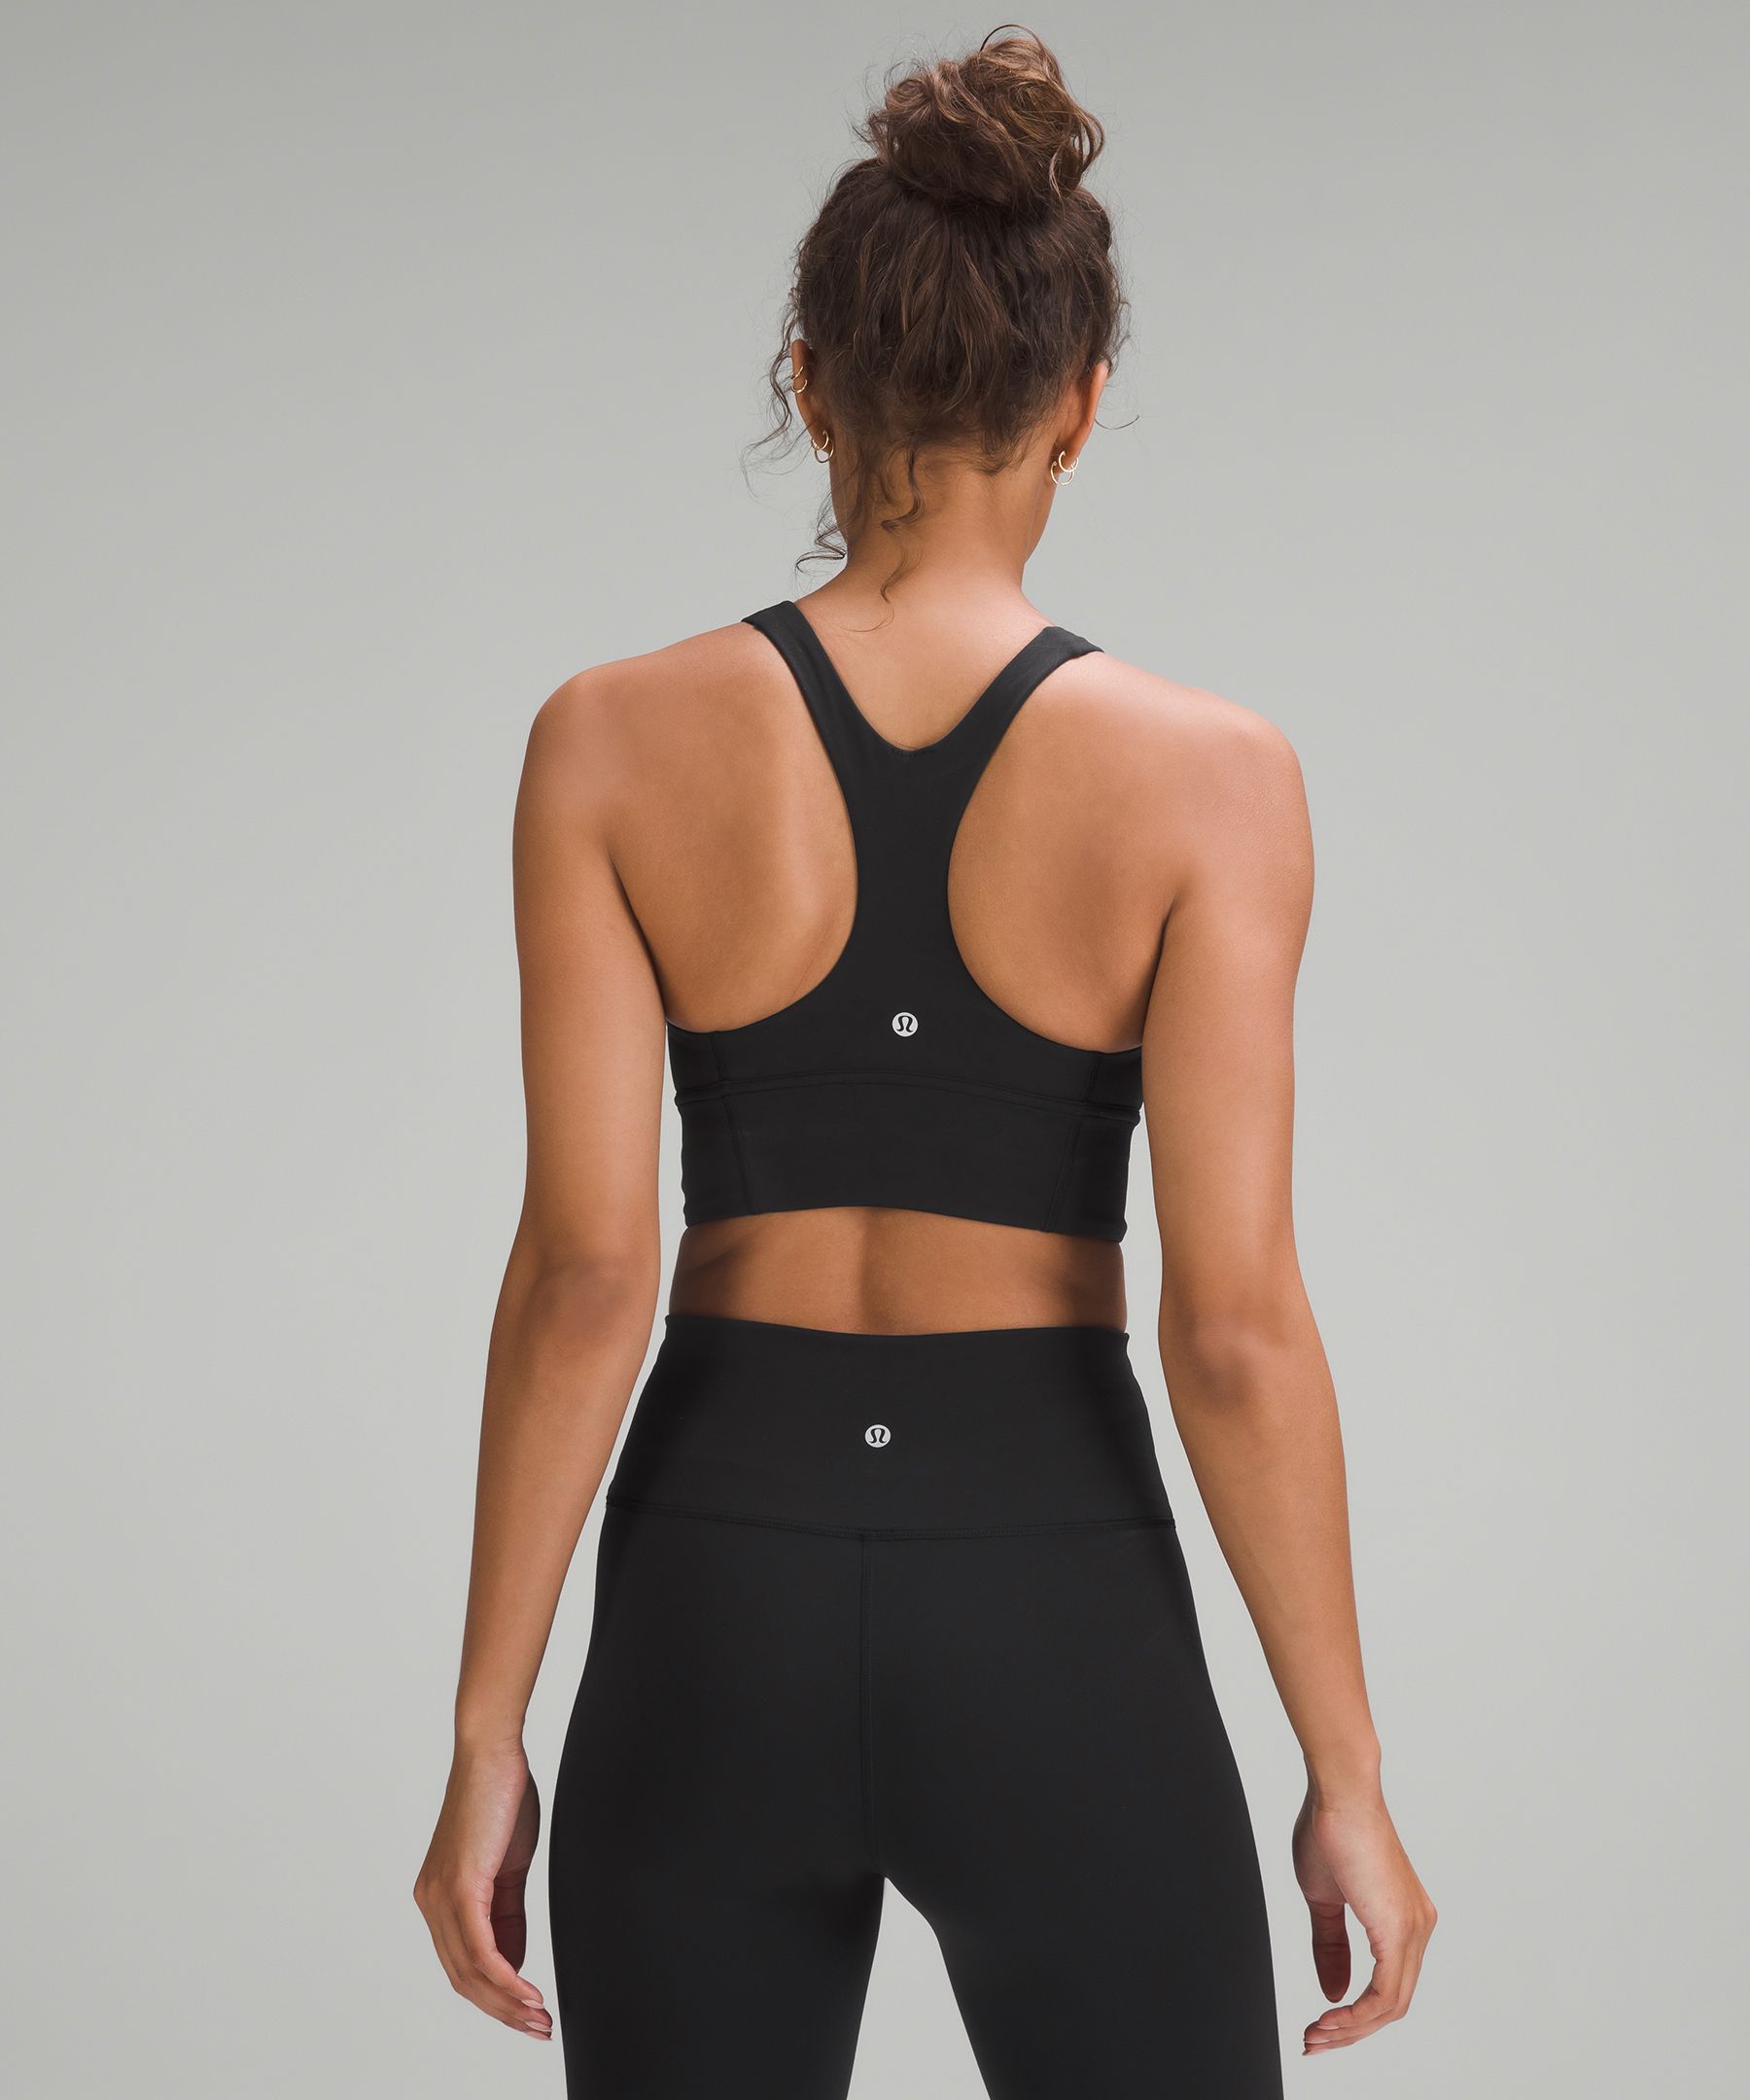 KS-QON BENG Tie Dye Women's Sports Bra Support Yoga Bras Gym Workout Tank  Tops at  Women's Clothing store